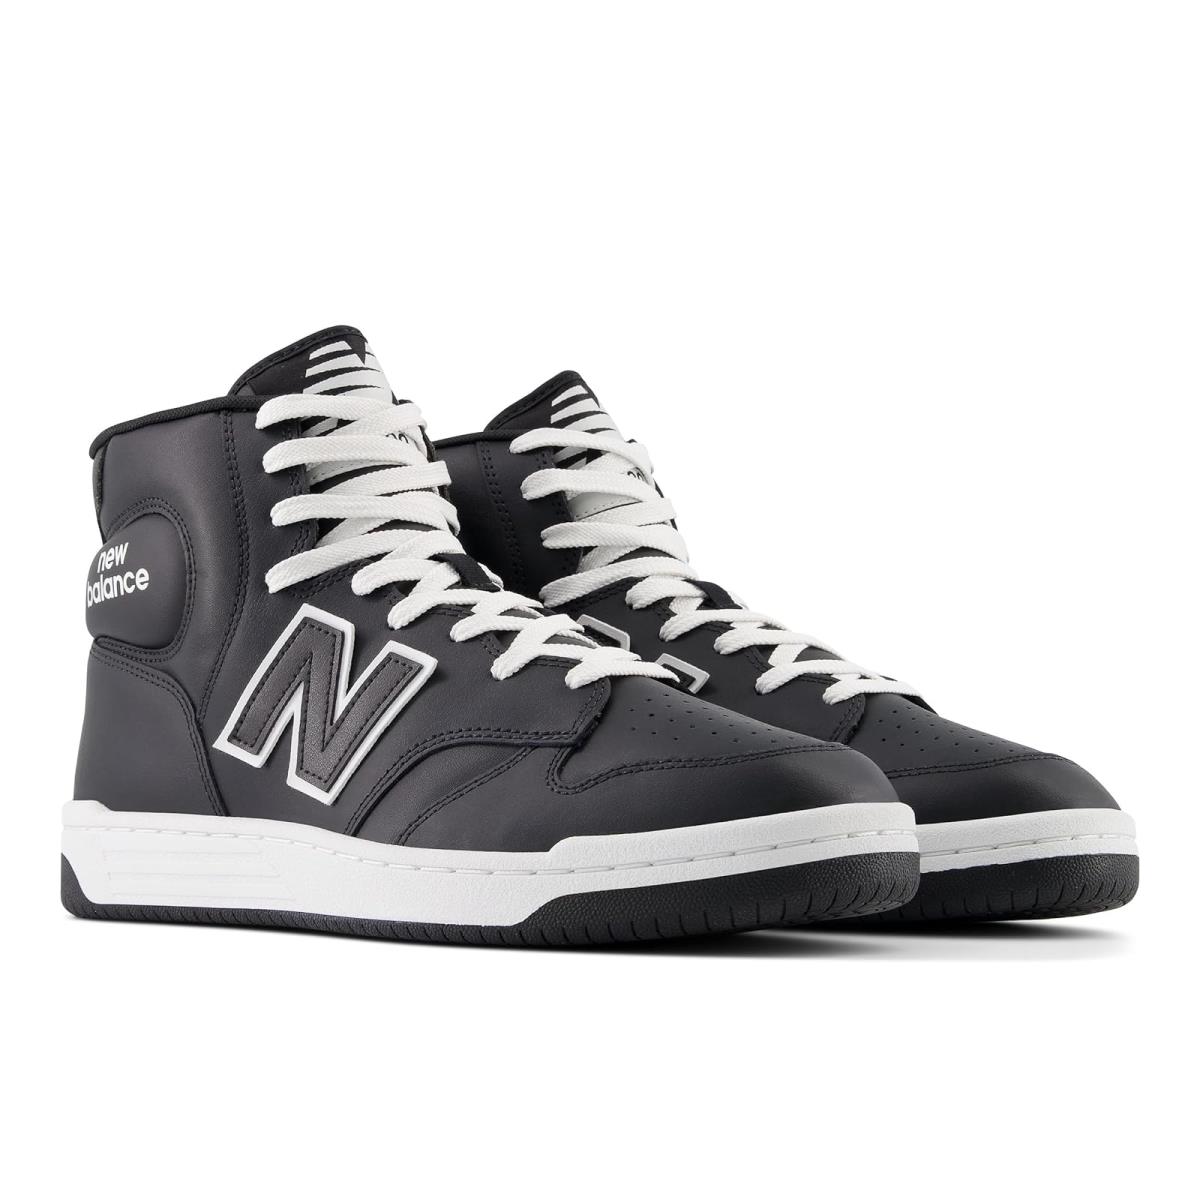 Unisex Sneakers Athletic Shoes New Balance Classics BB480v1 Black/White